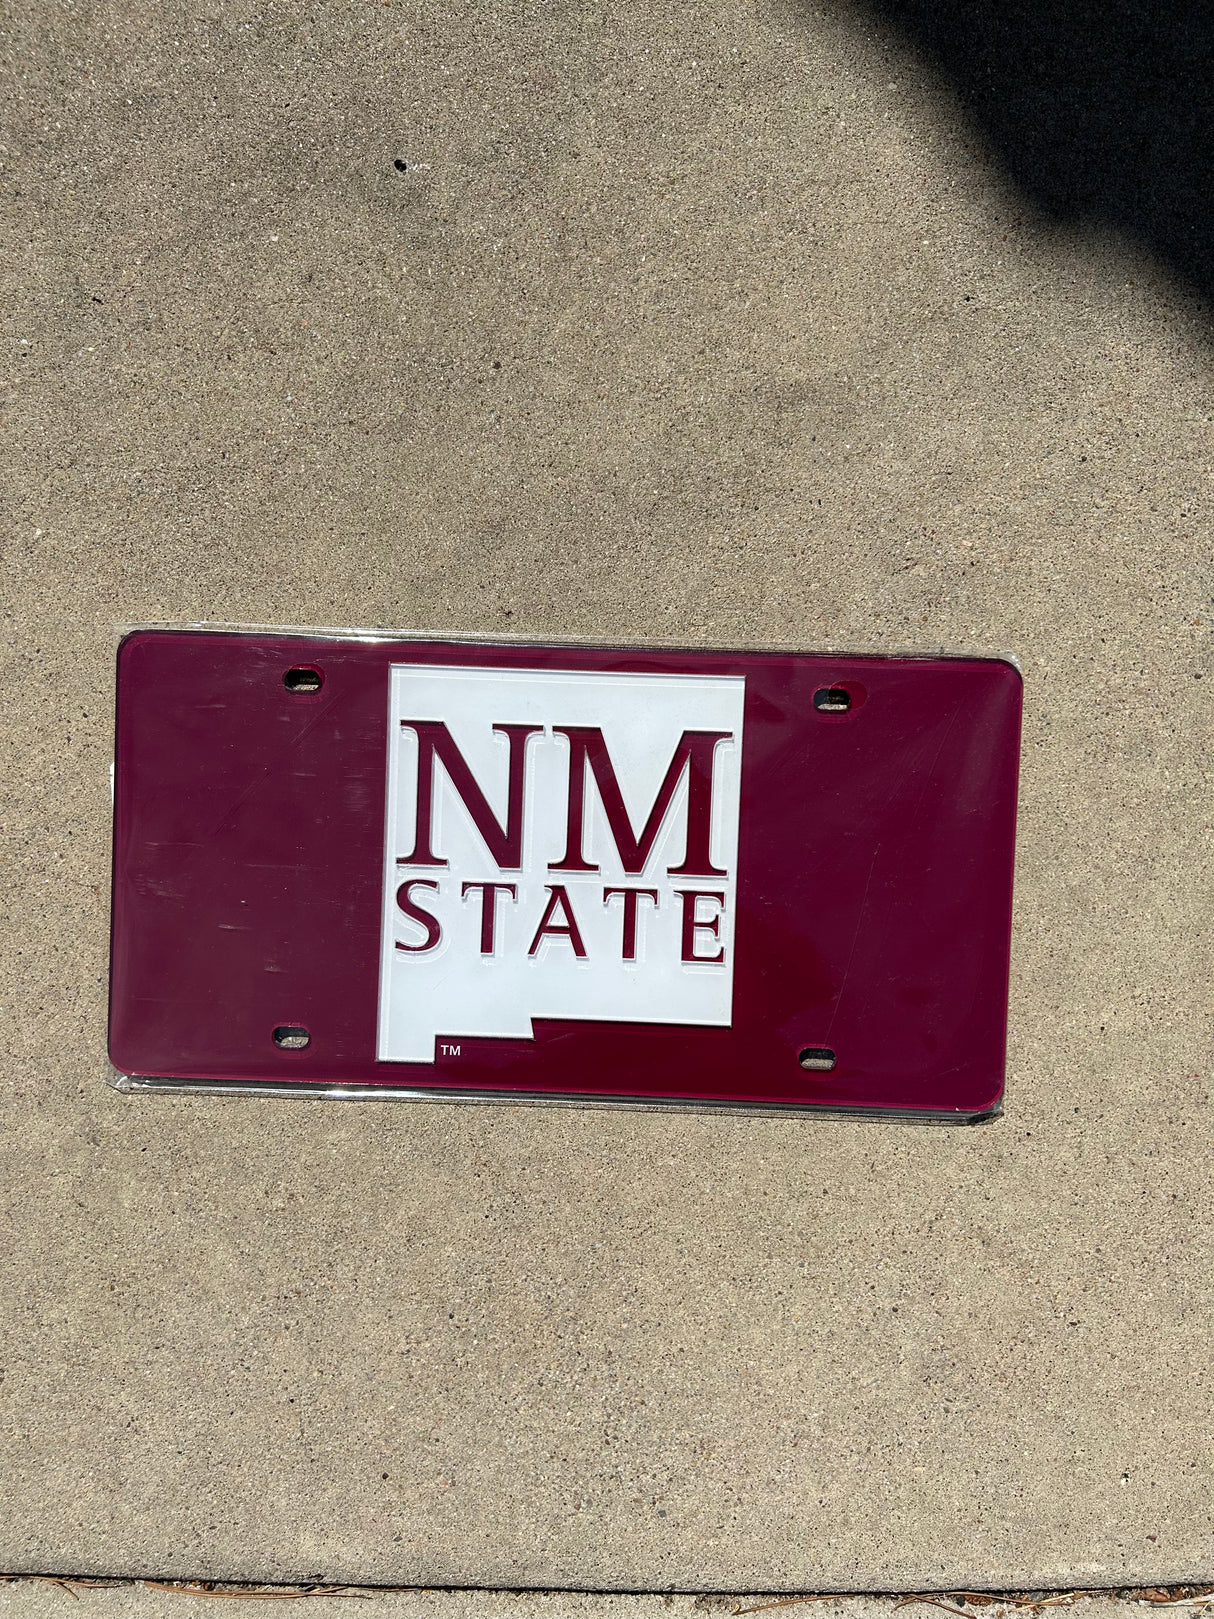 NMSU State Acrylic License Plate